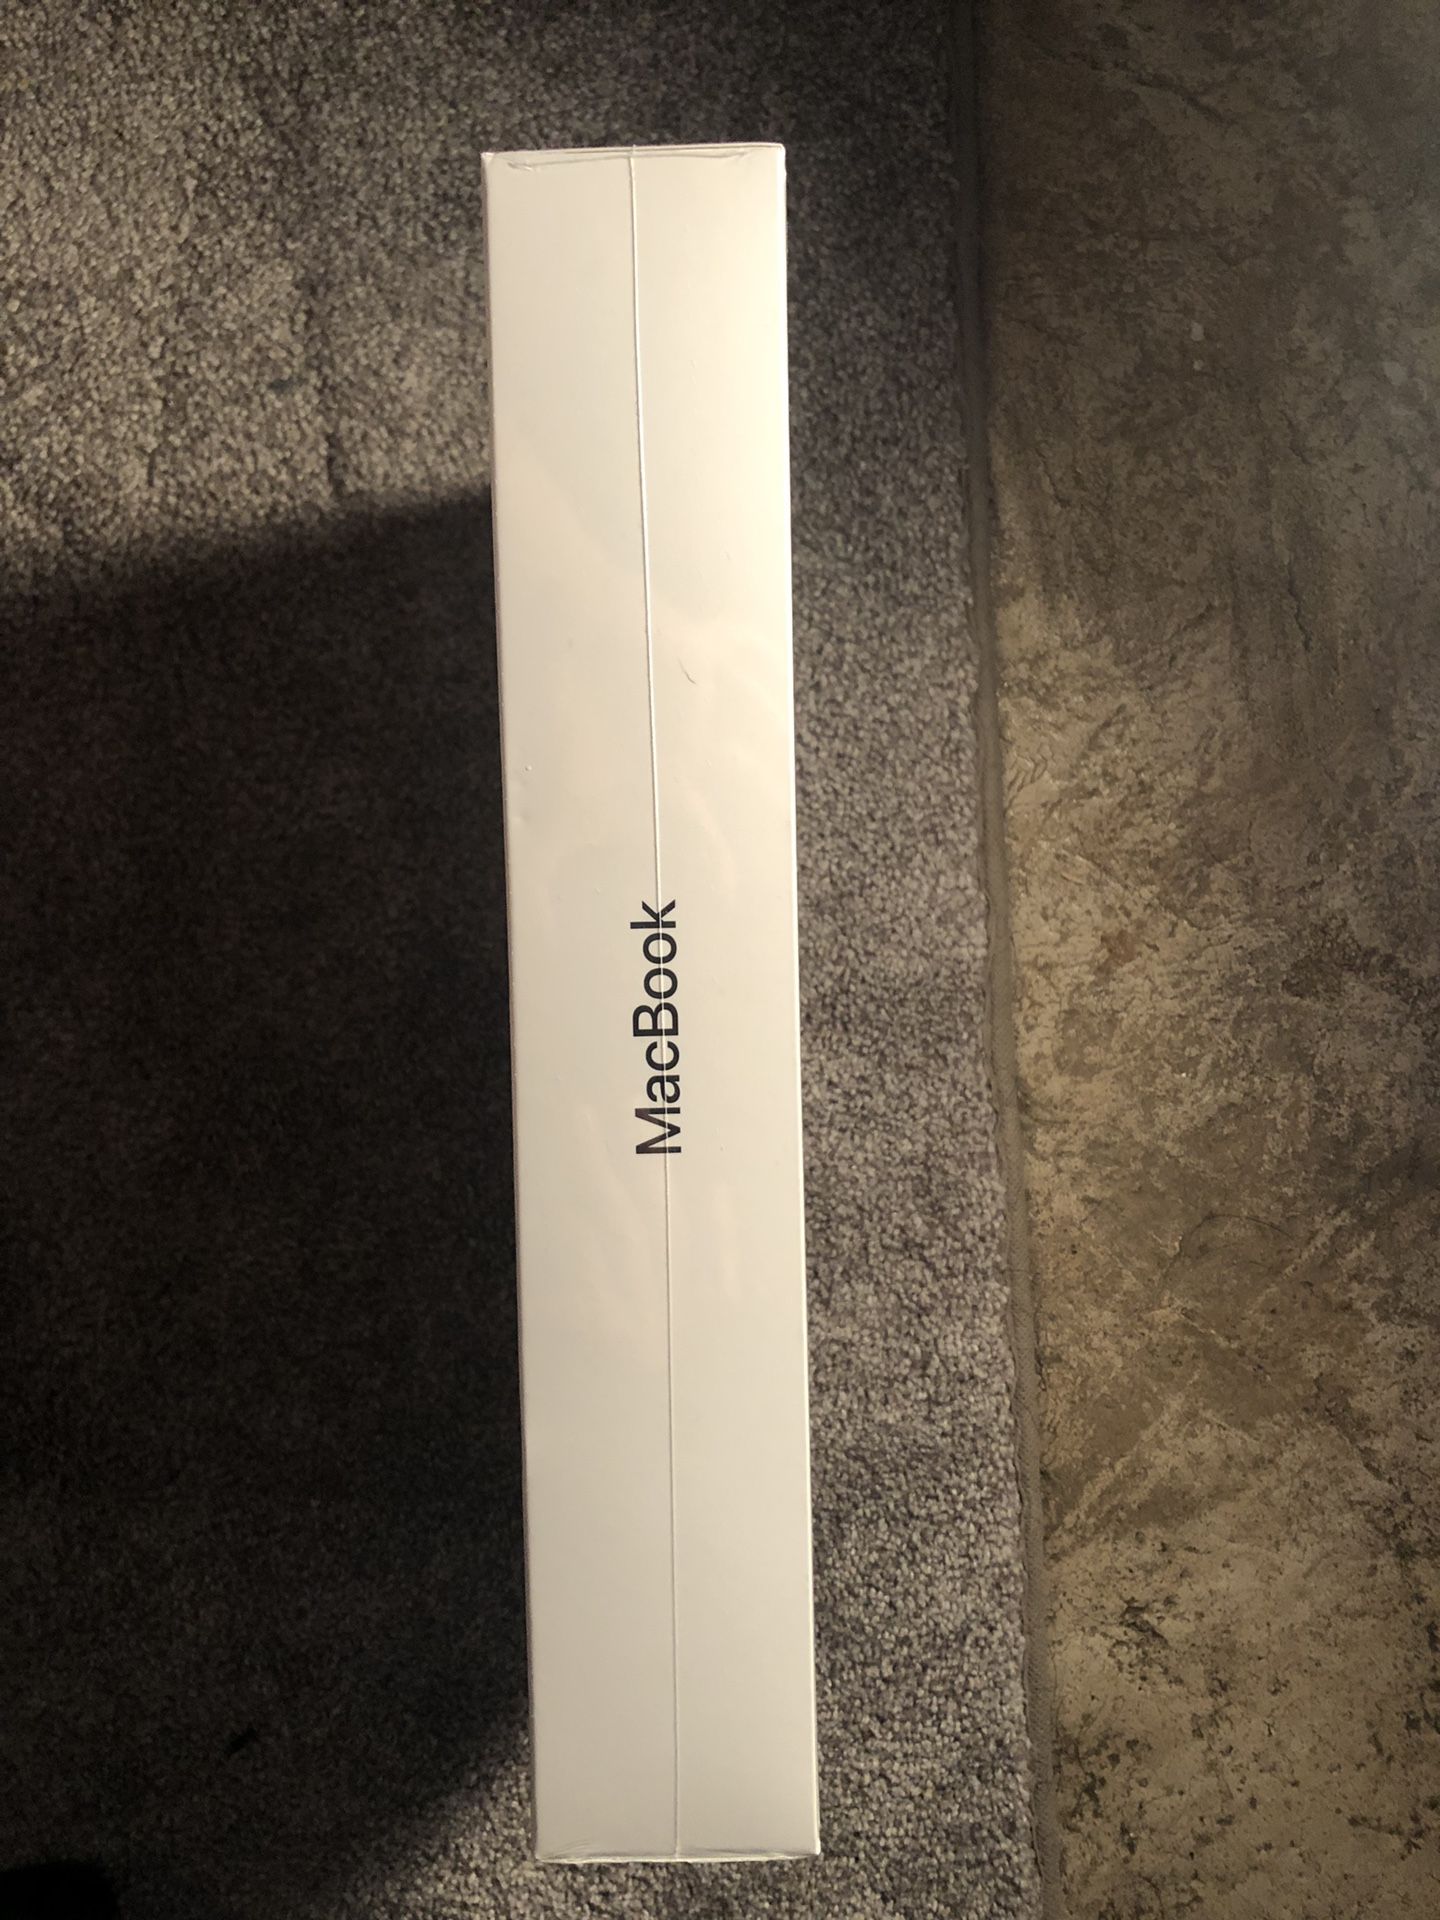 MacBook 12 inch 2018 (Brand New/Never Opened)